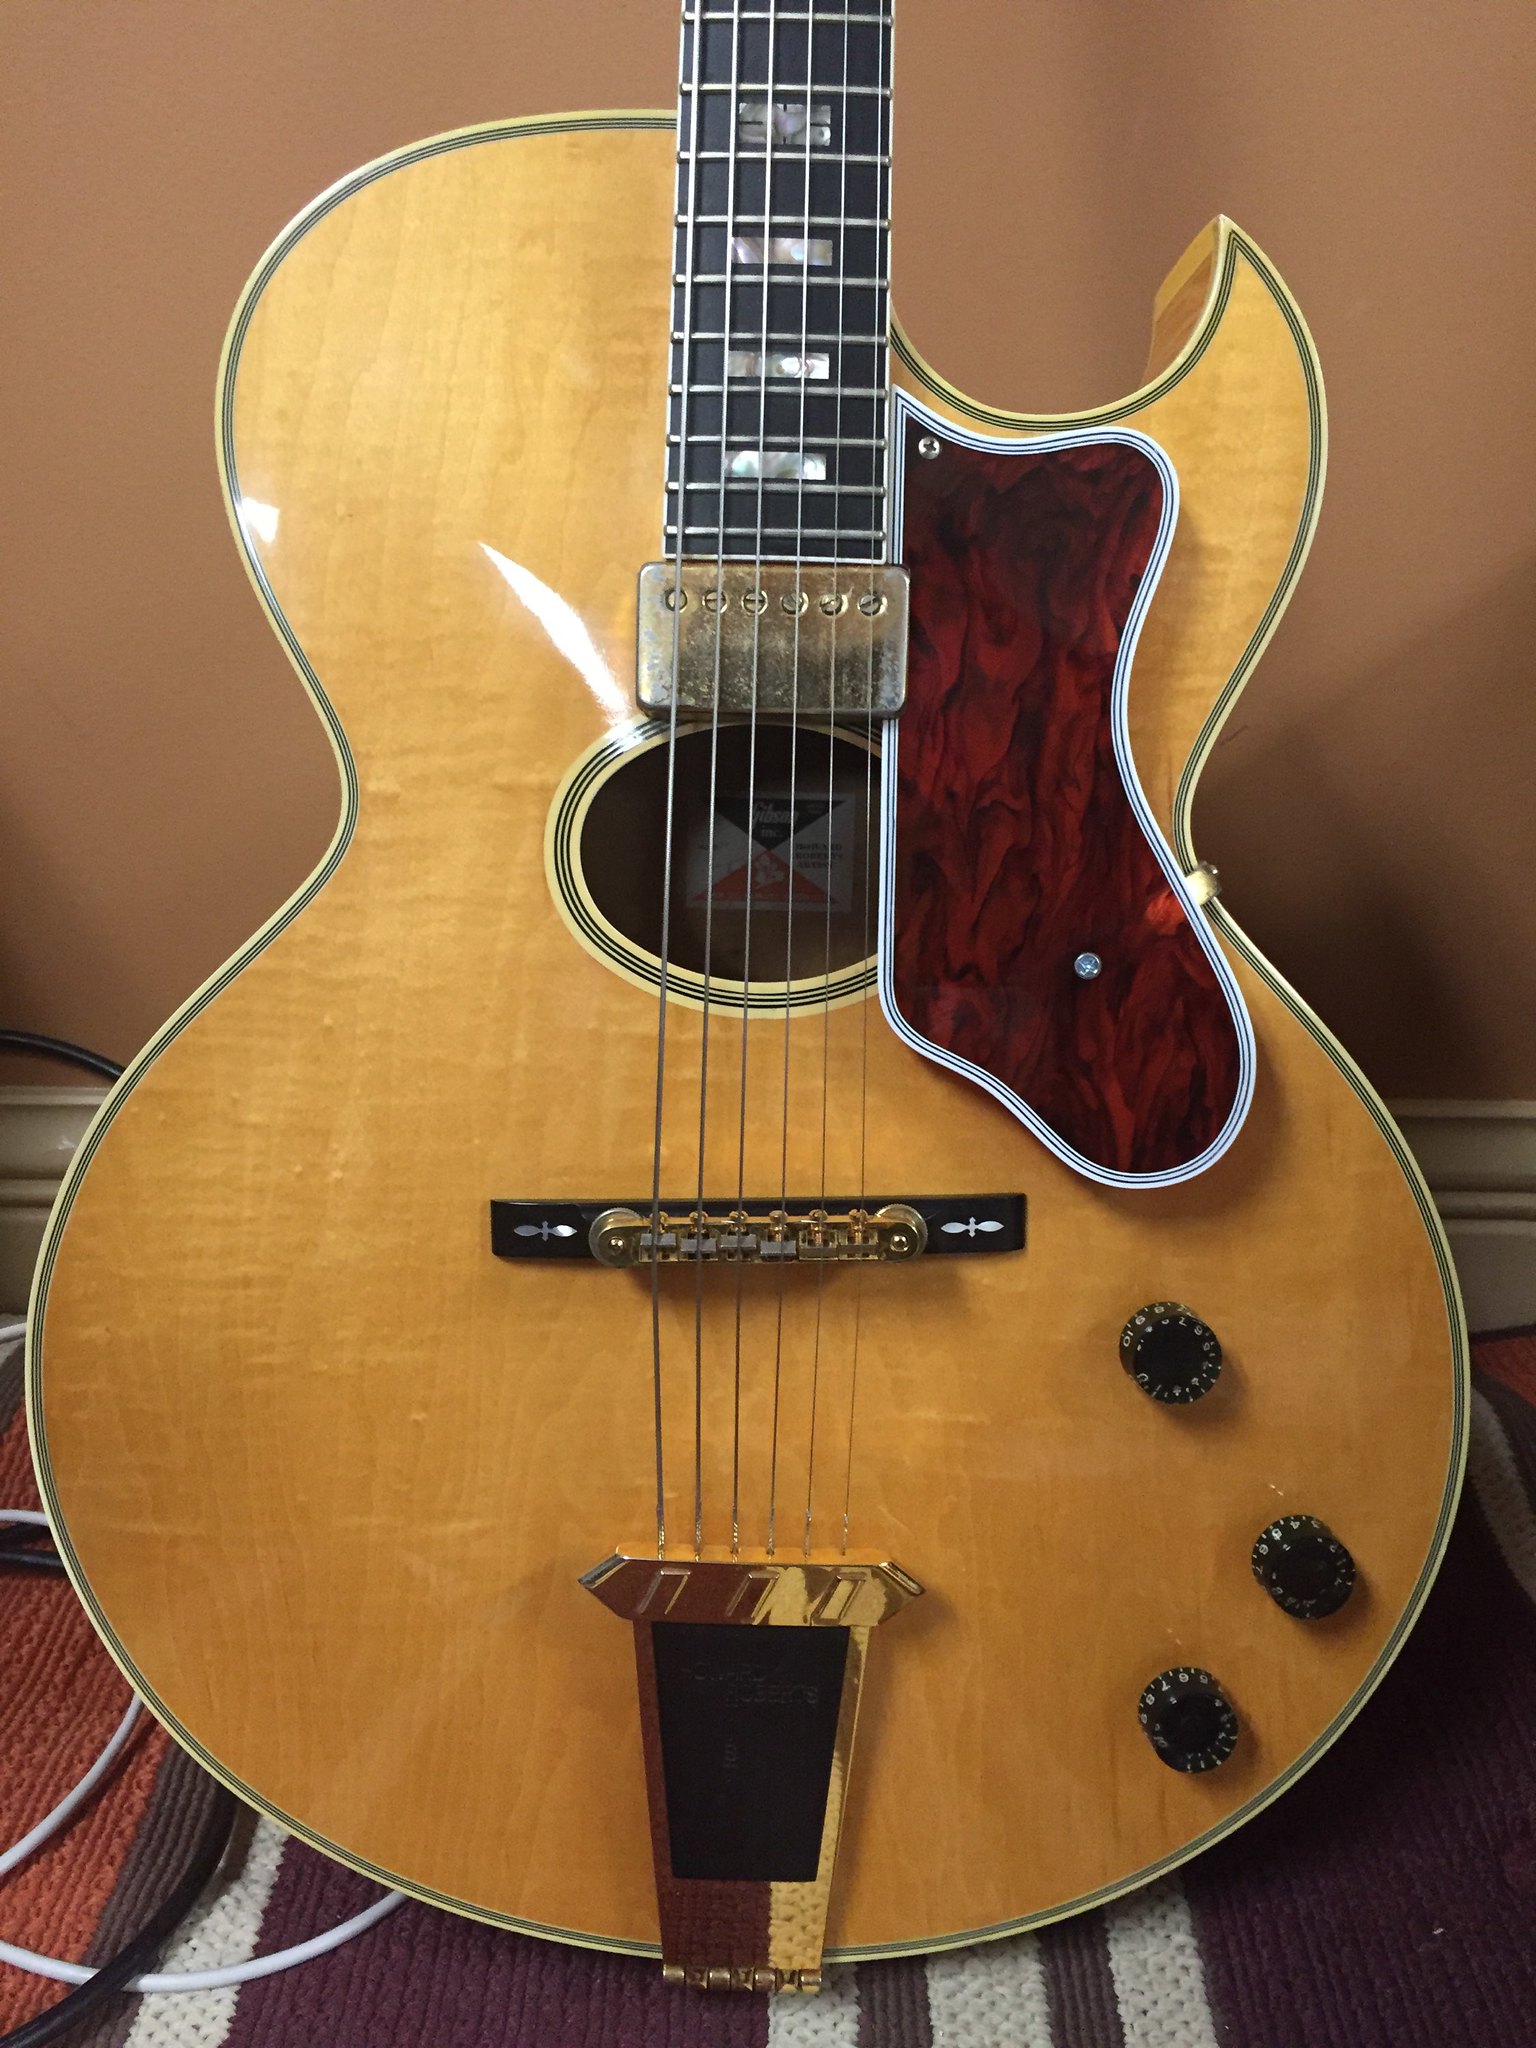 Vintage Gibson Guitar-50464489428_2200a15d74_k-jpg